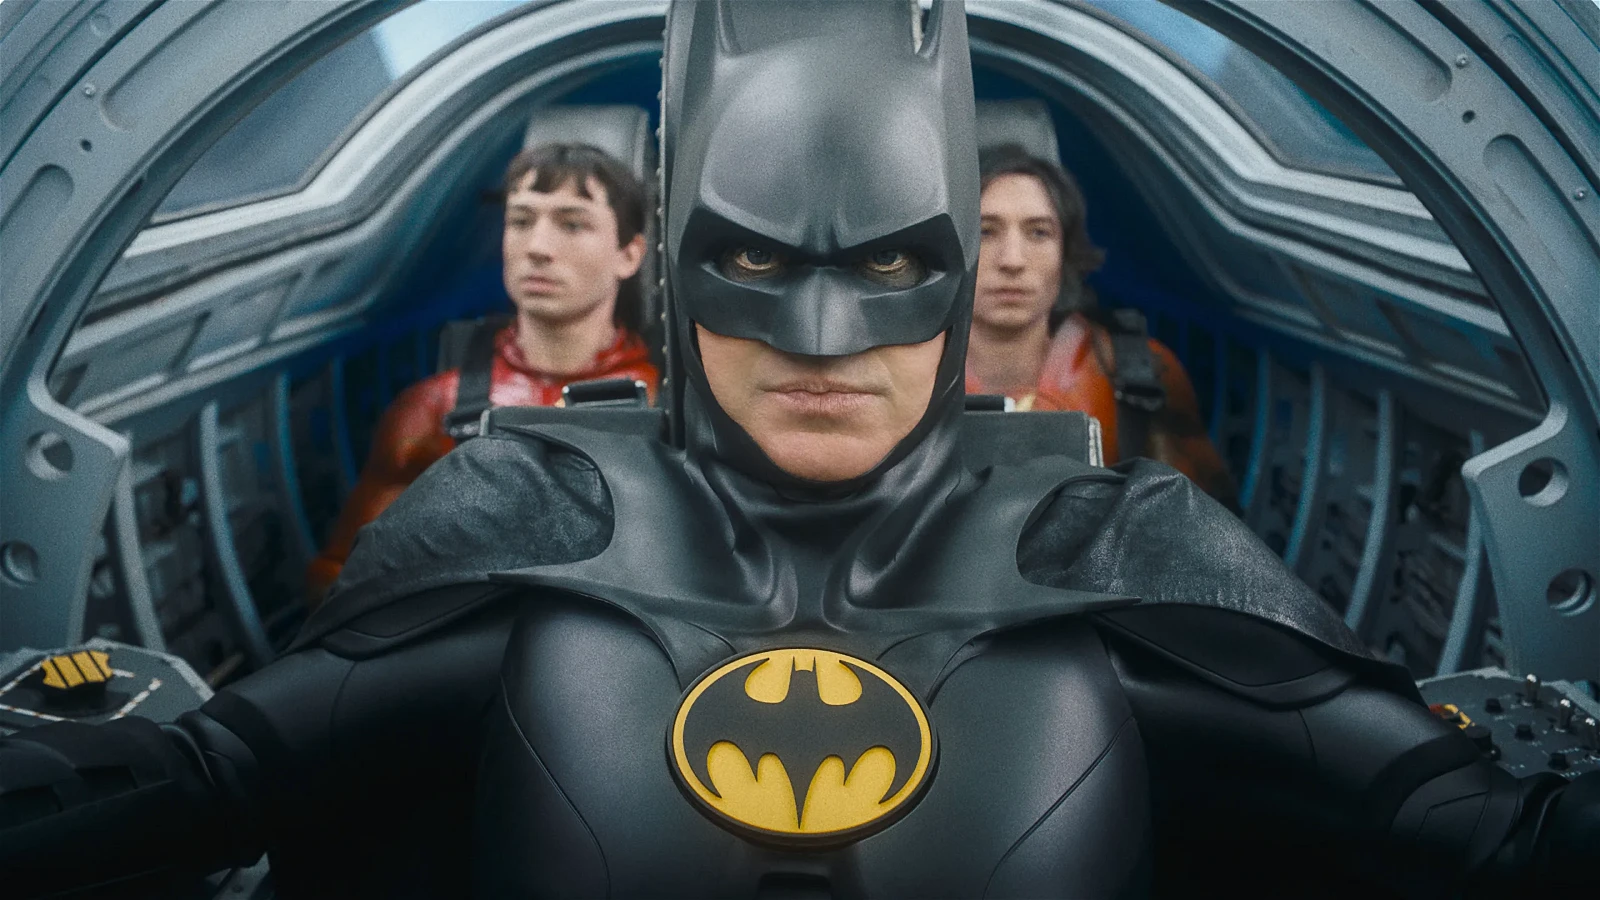 Michael Keaton as Batman in a still from The Flash